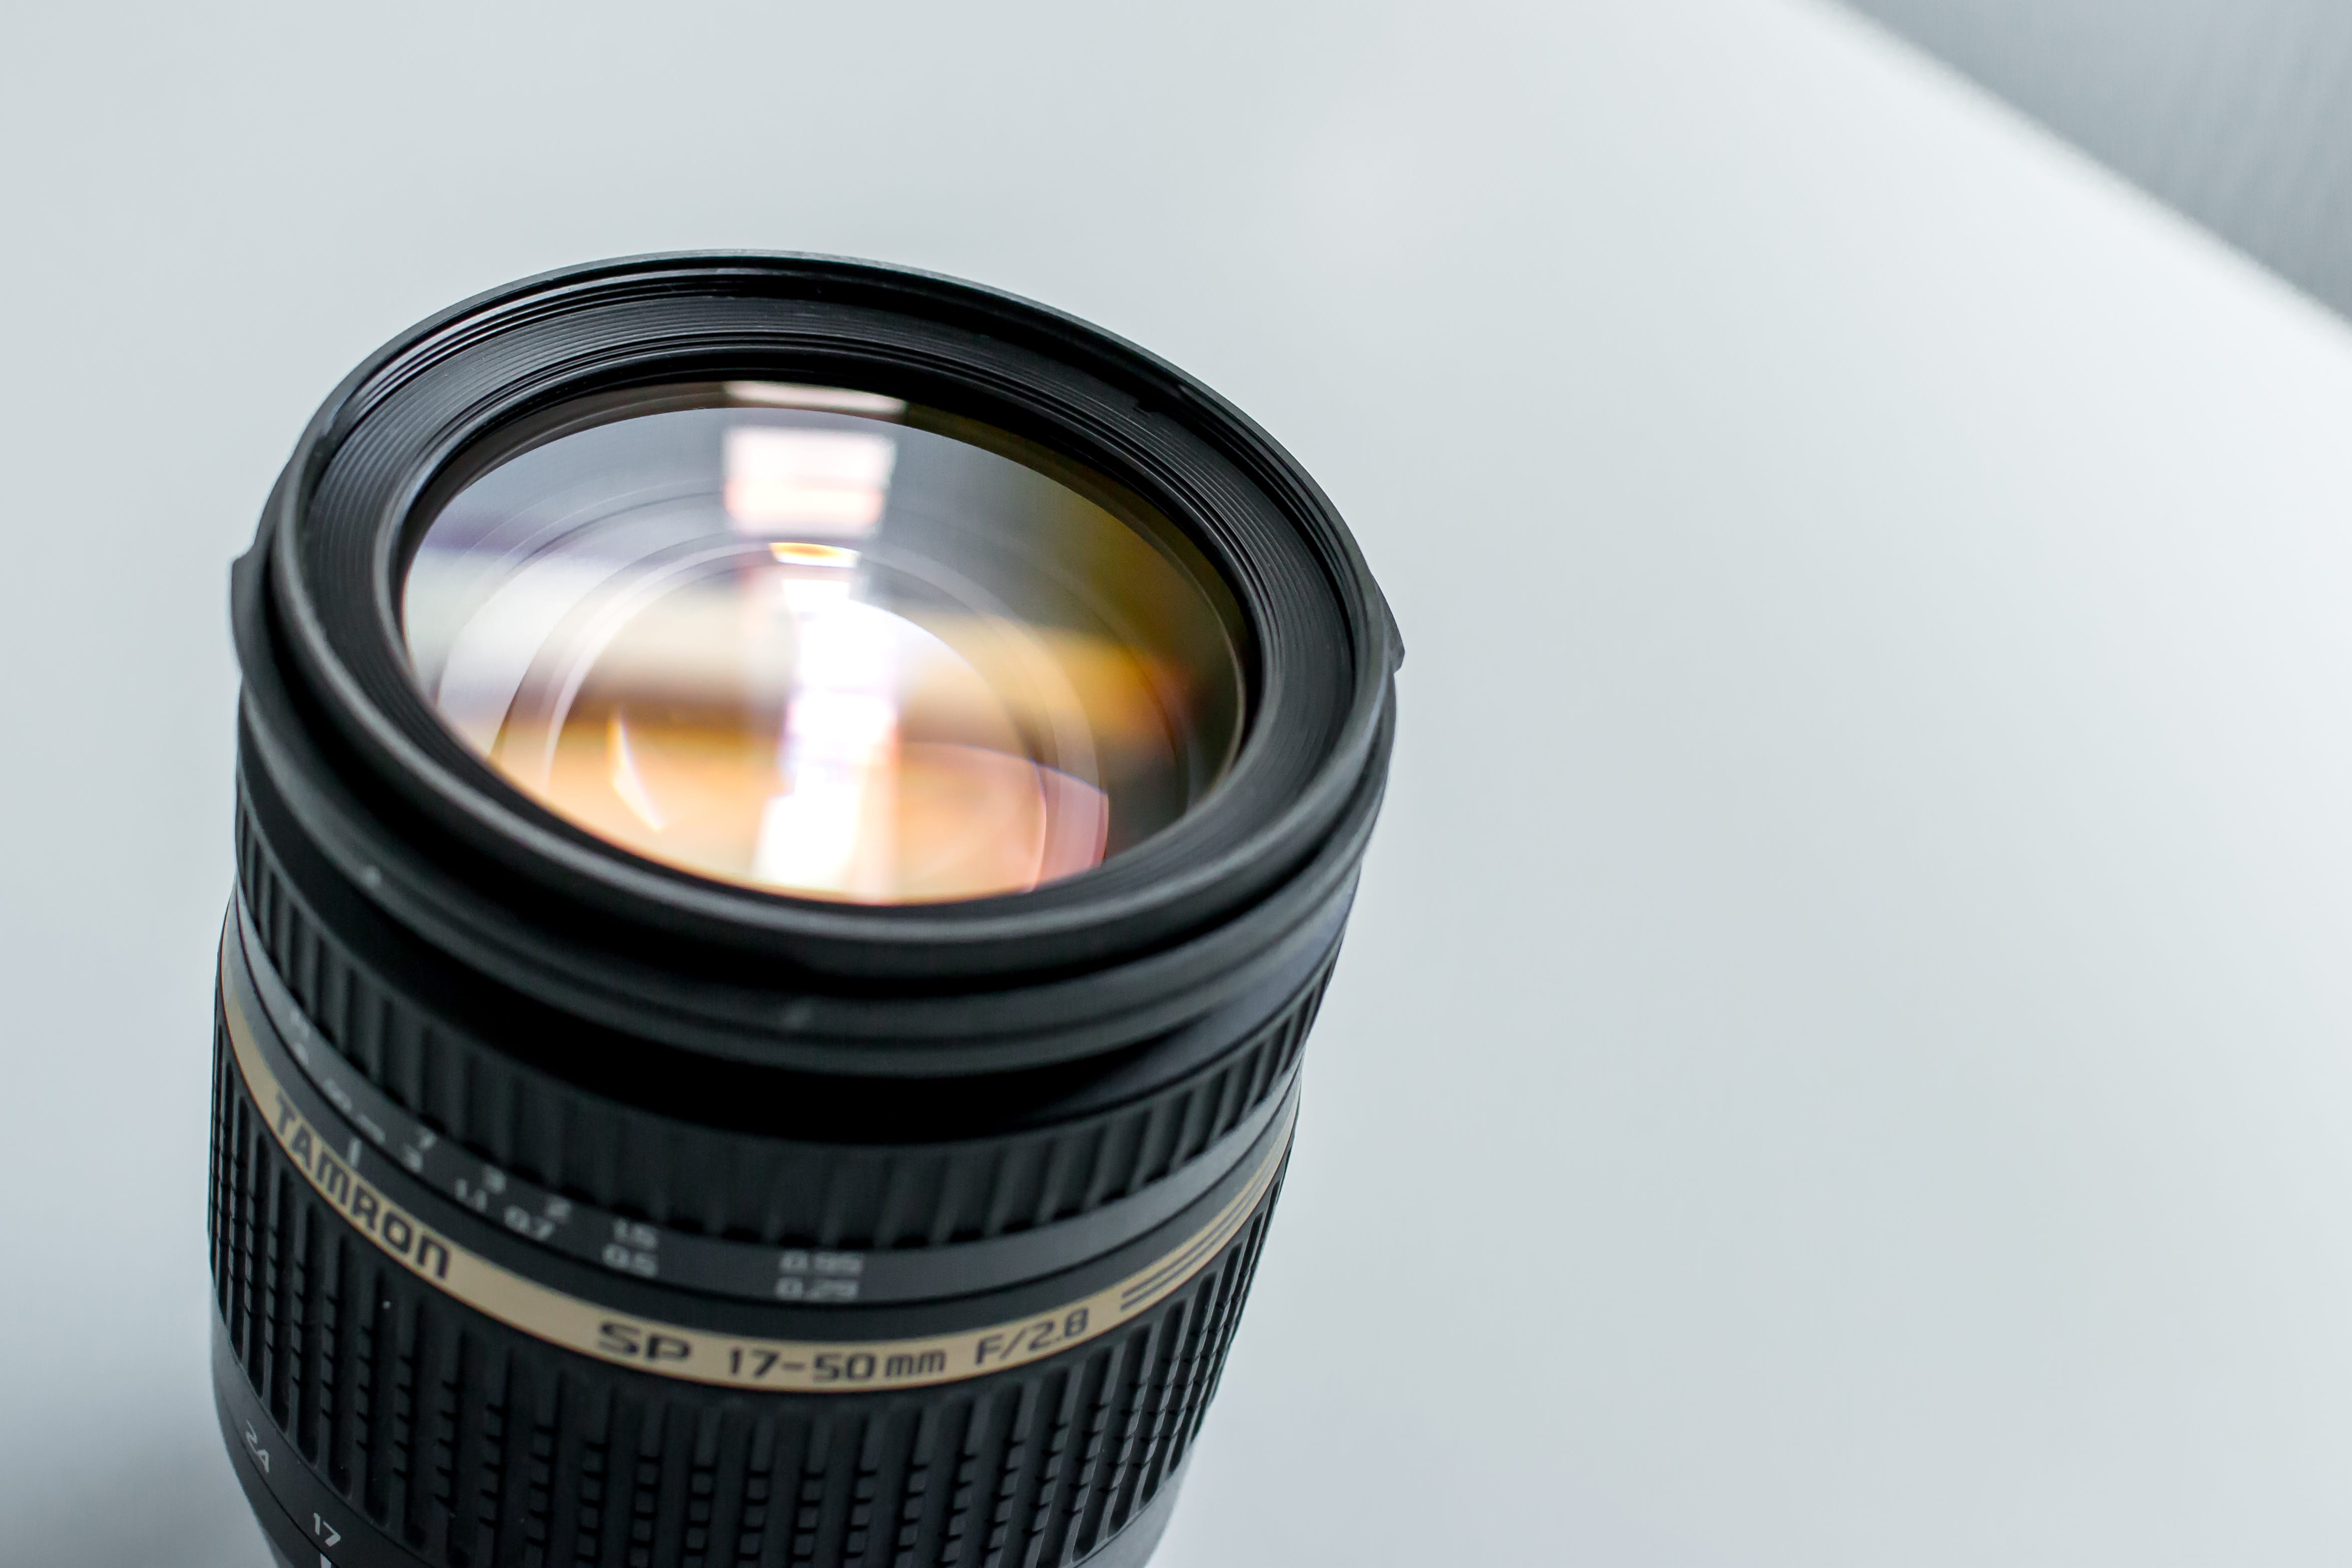 Modern lens on a photographer’s desk, photography themes, lens - optical instrument